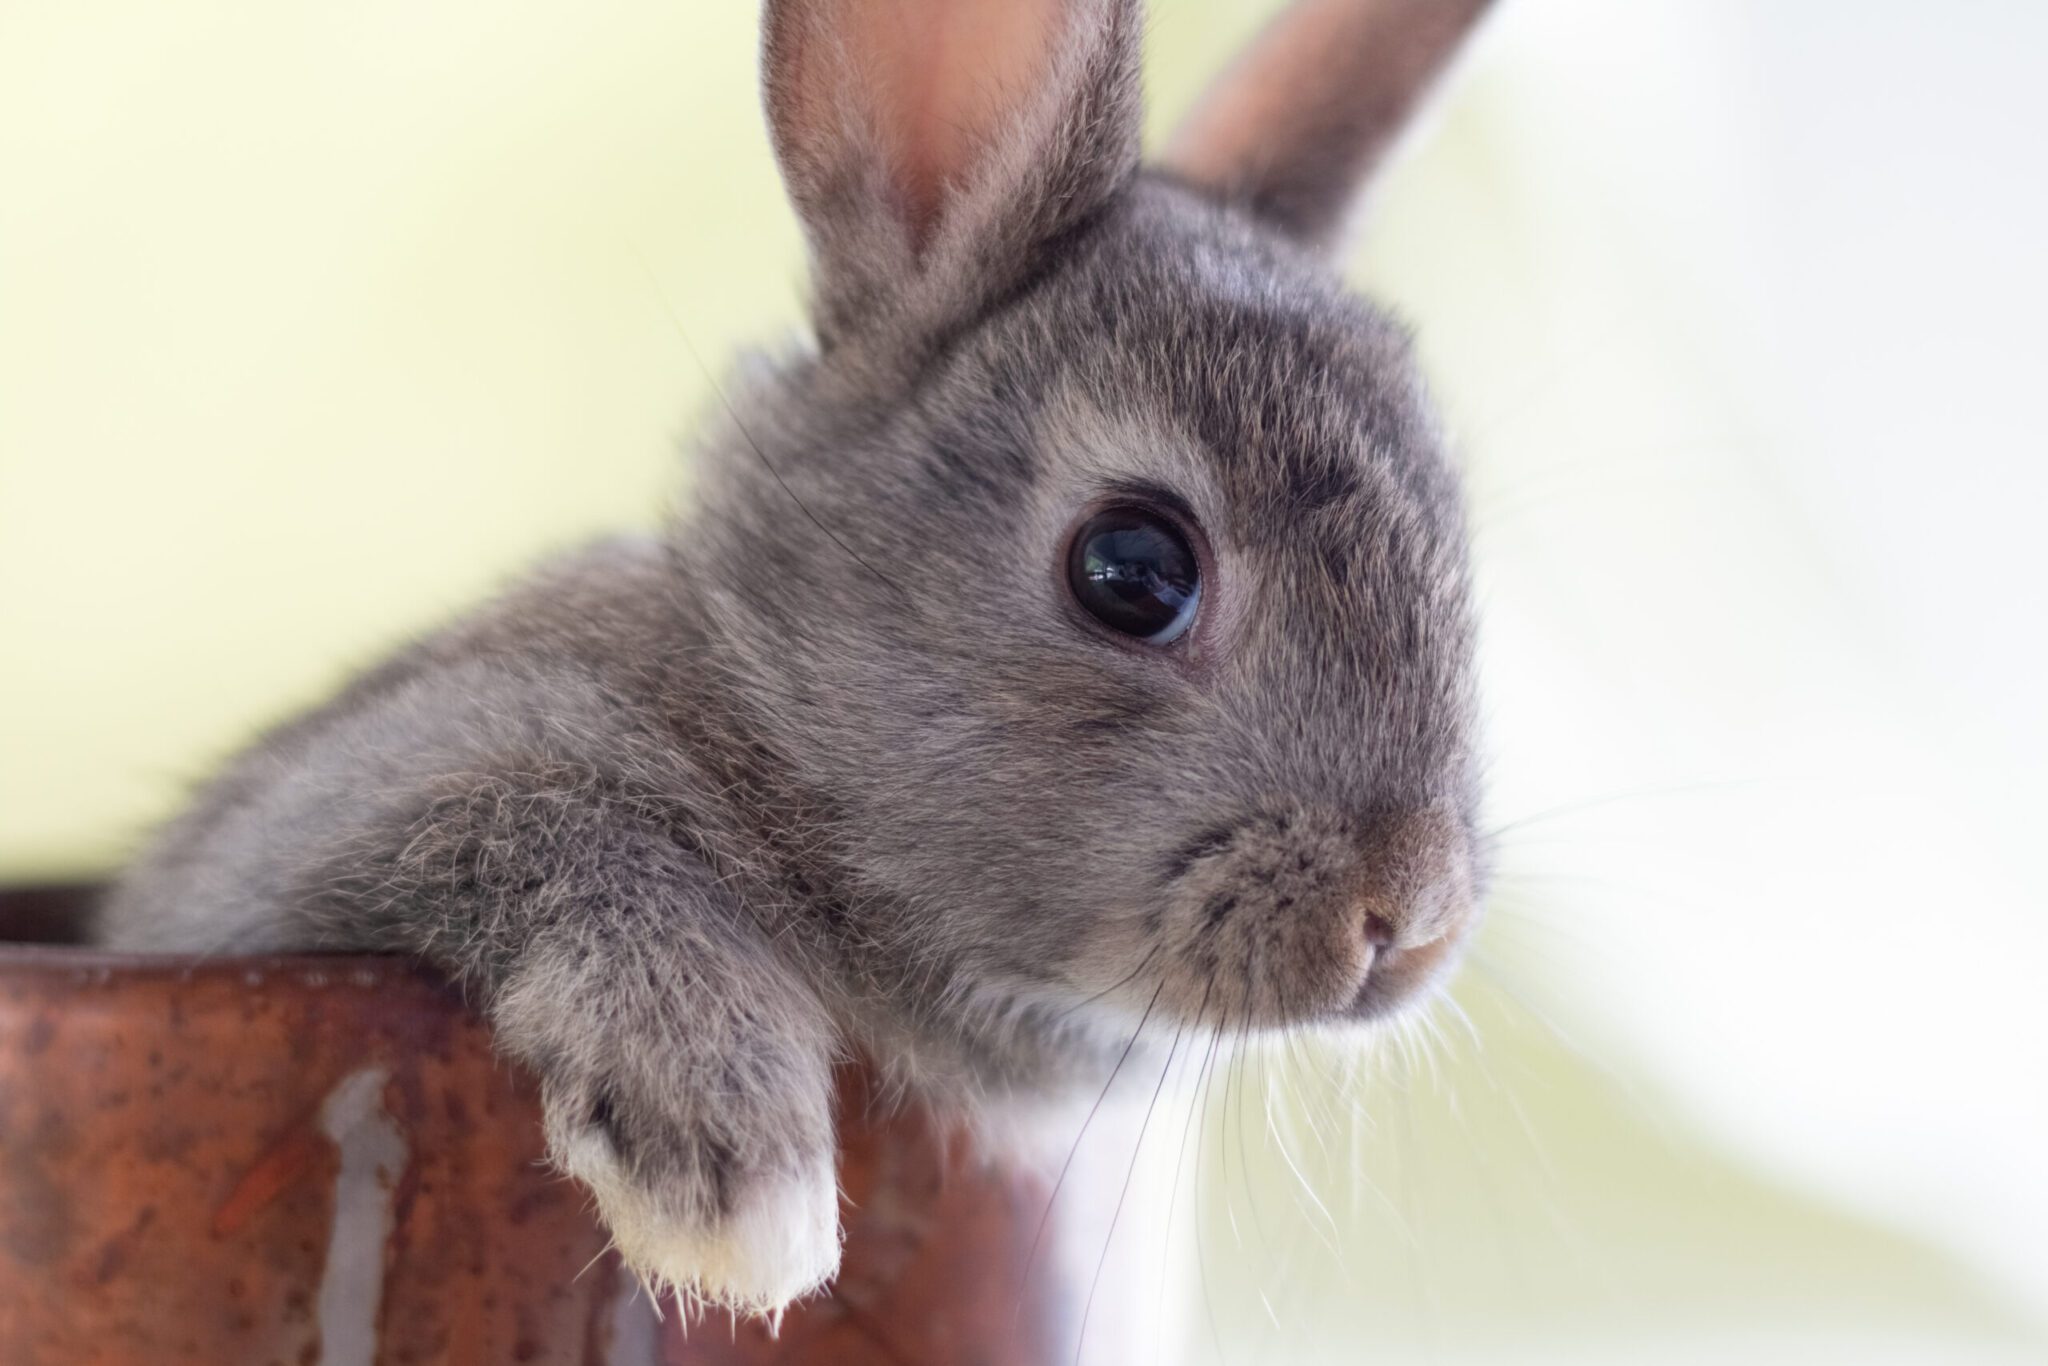 Close up of a bunny